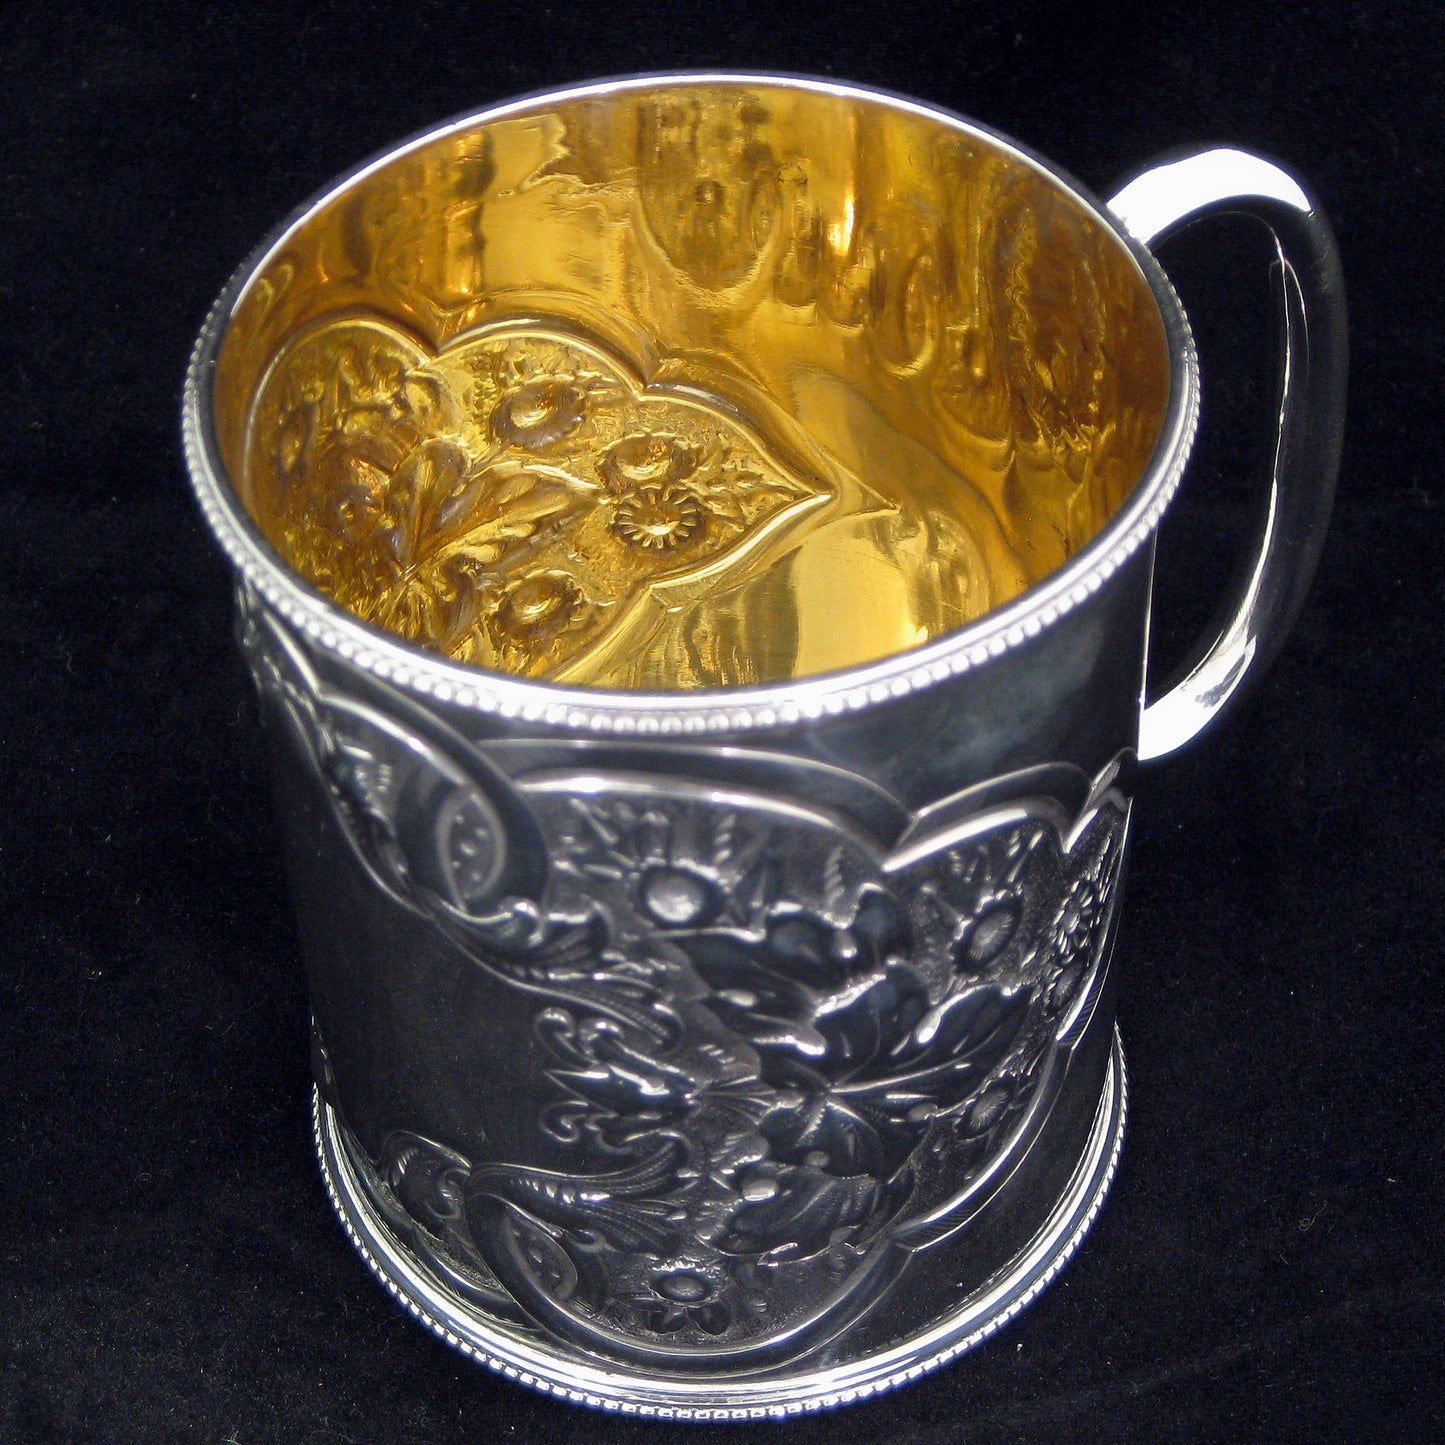 A fine quality silver embossed mug.